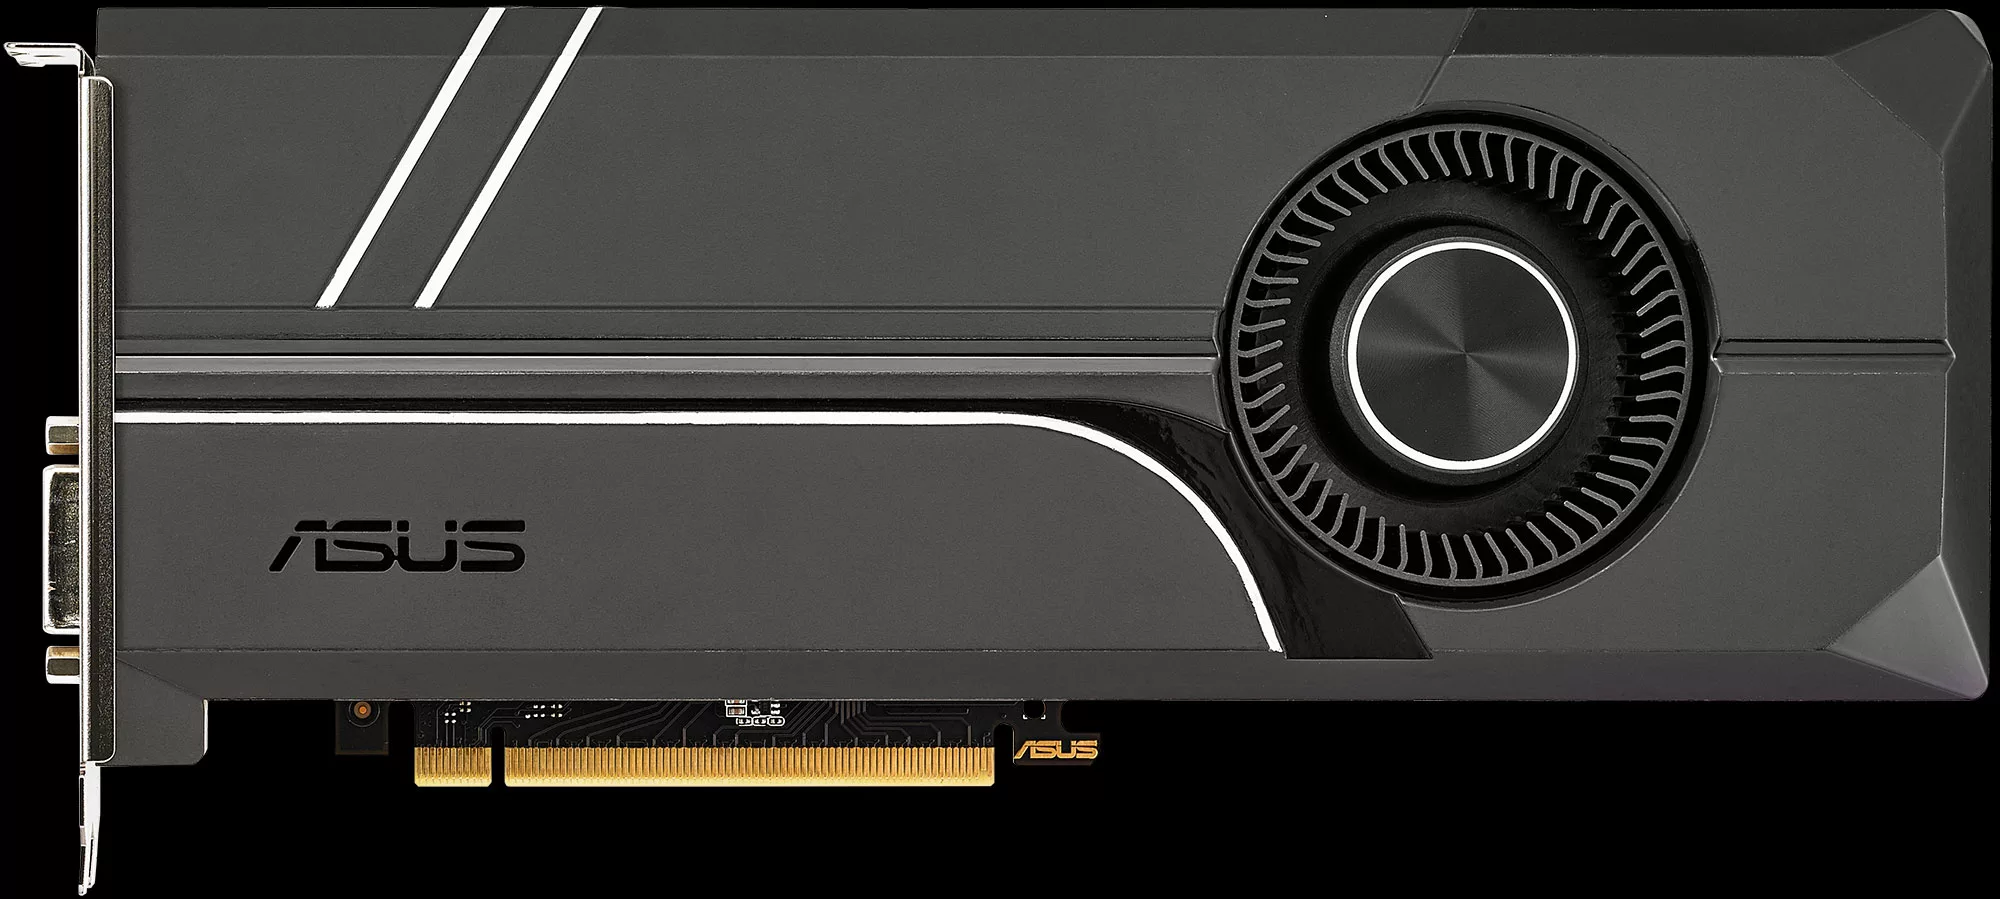 ROG Strix supersizes the GeForce GTX 1070 Ti graphics card | ROG